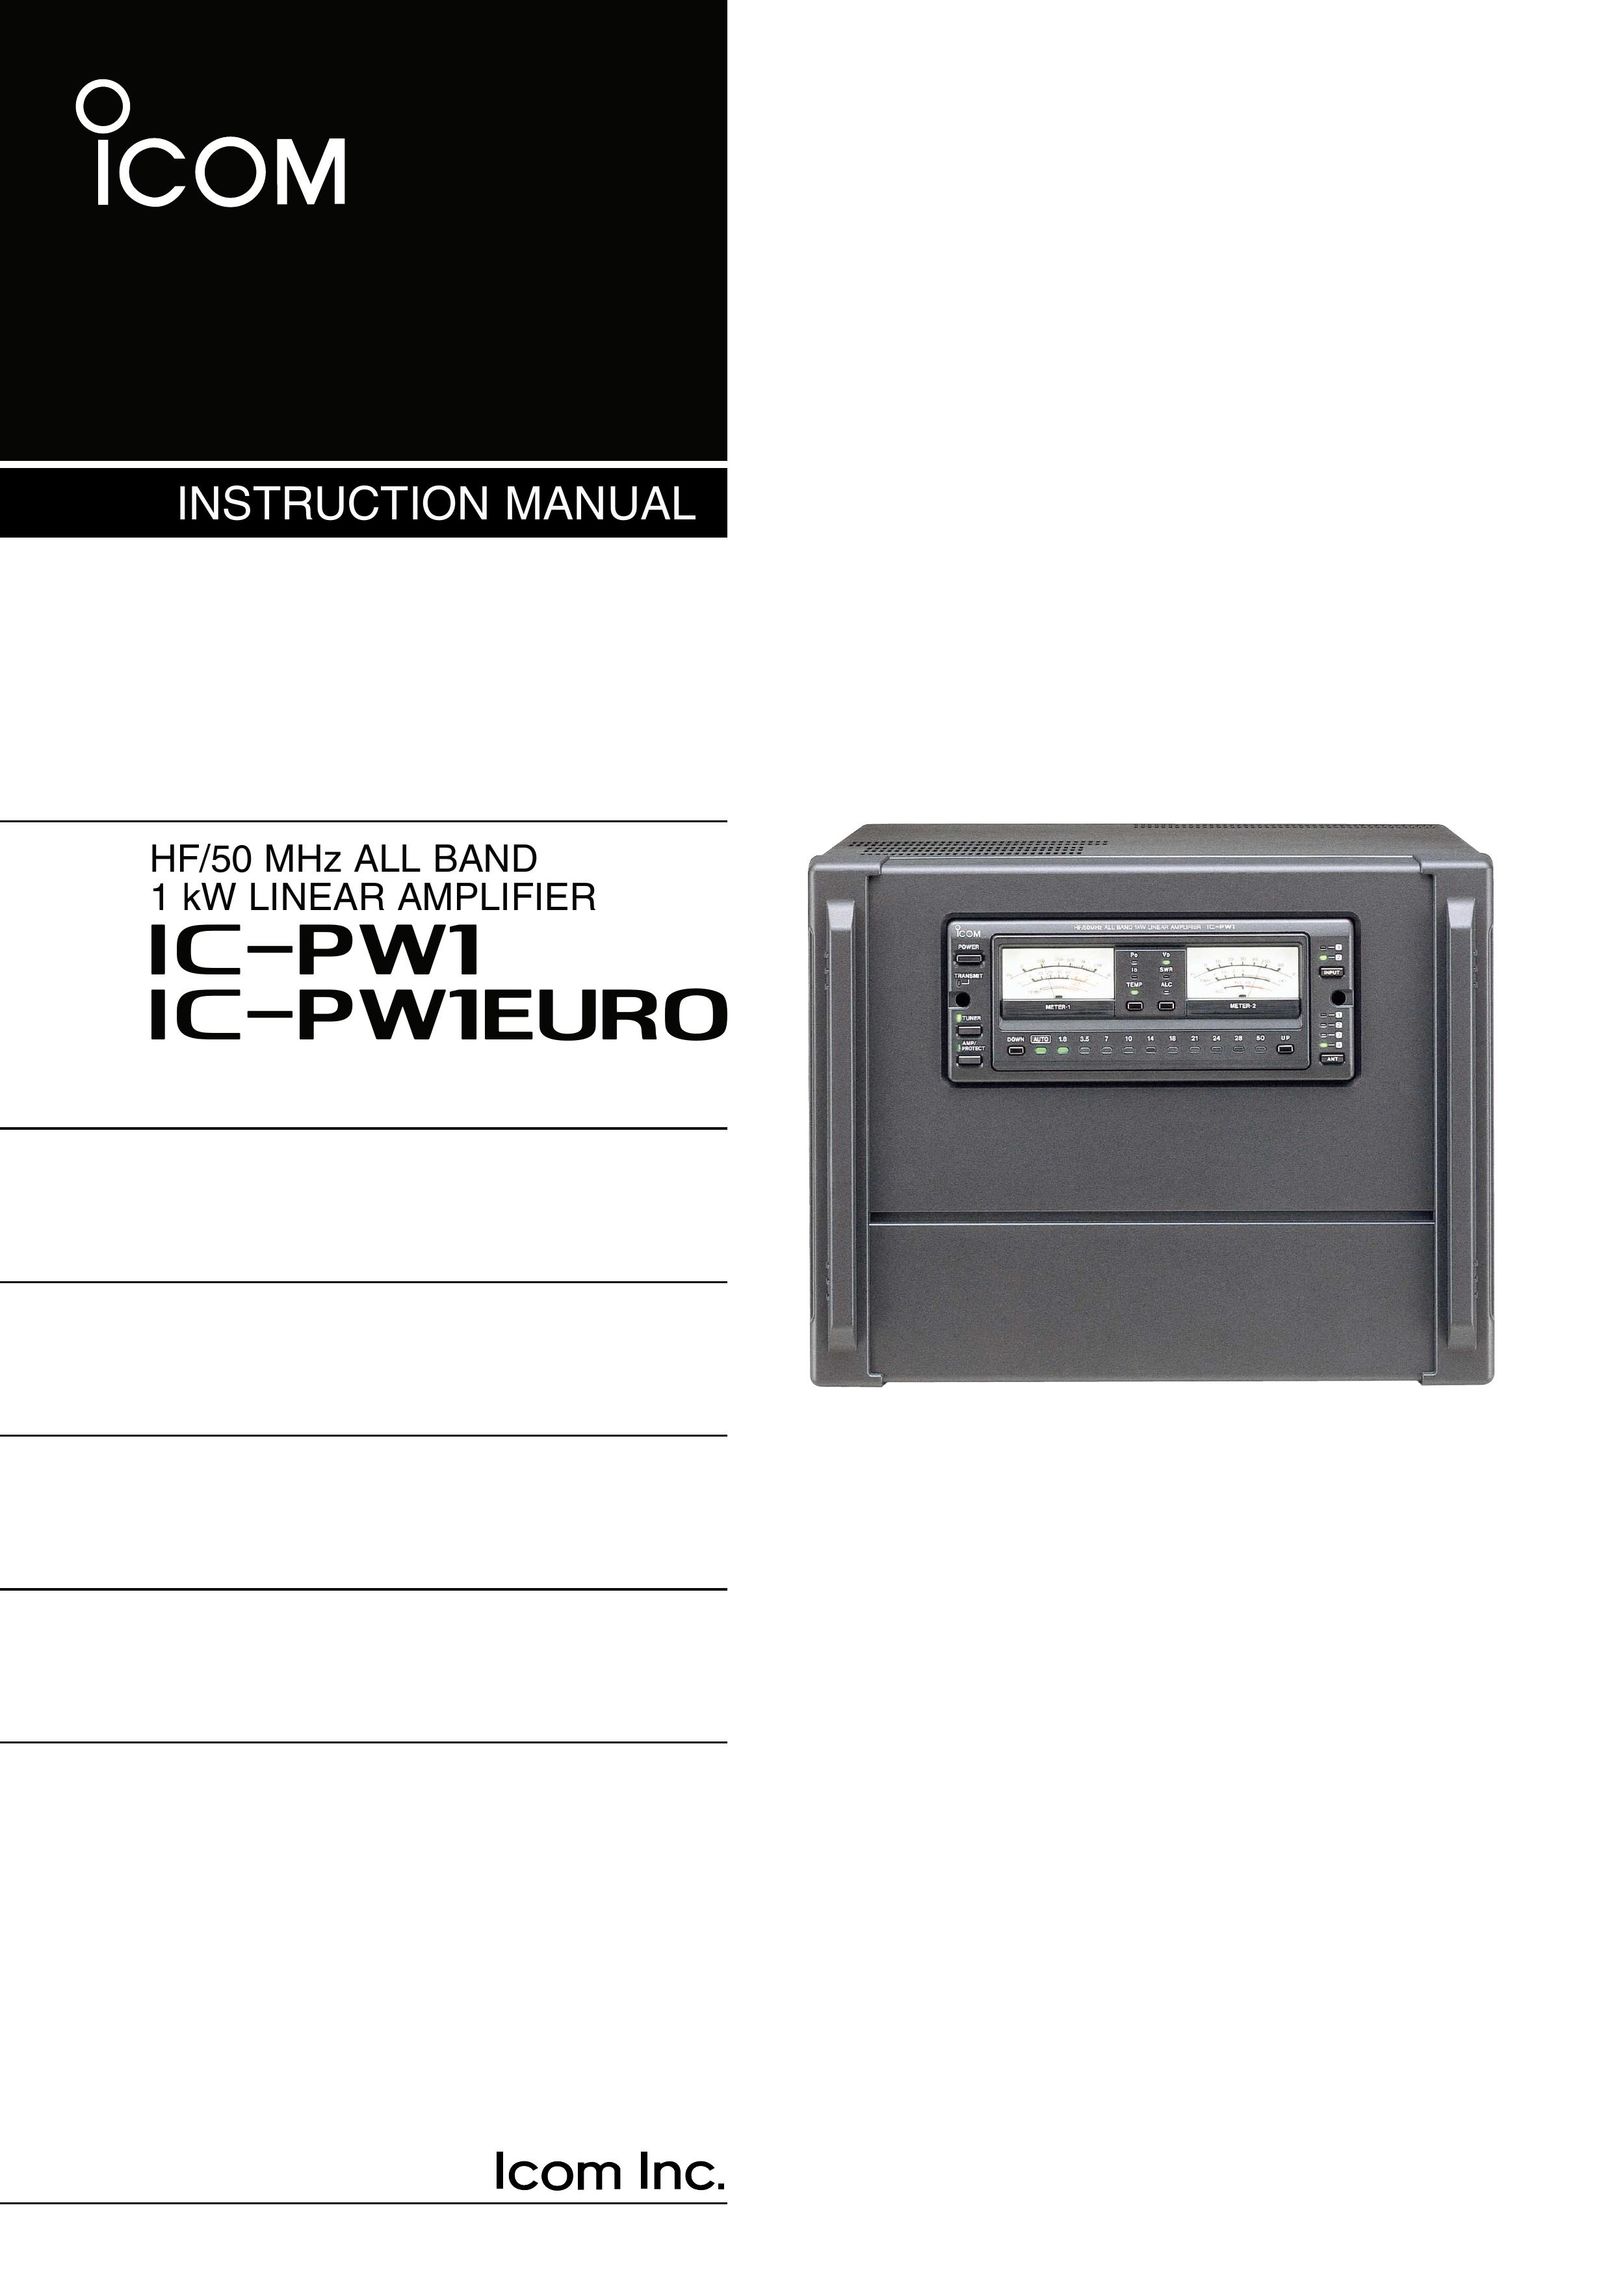 Icom iPW1 Car Amplifier User Manual